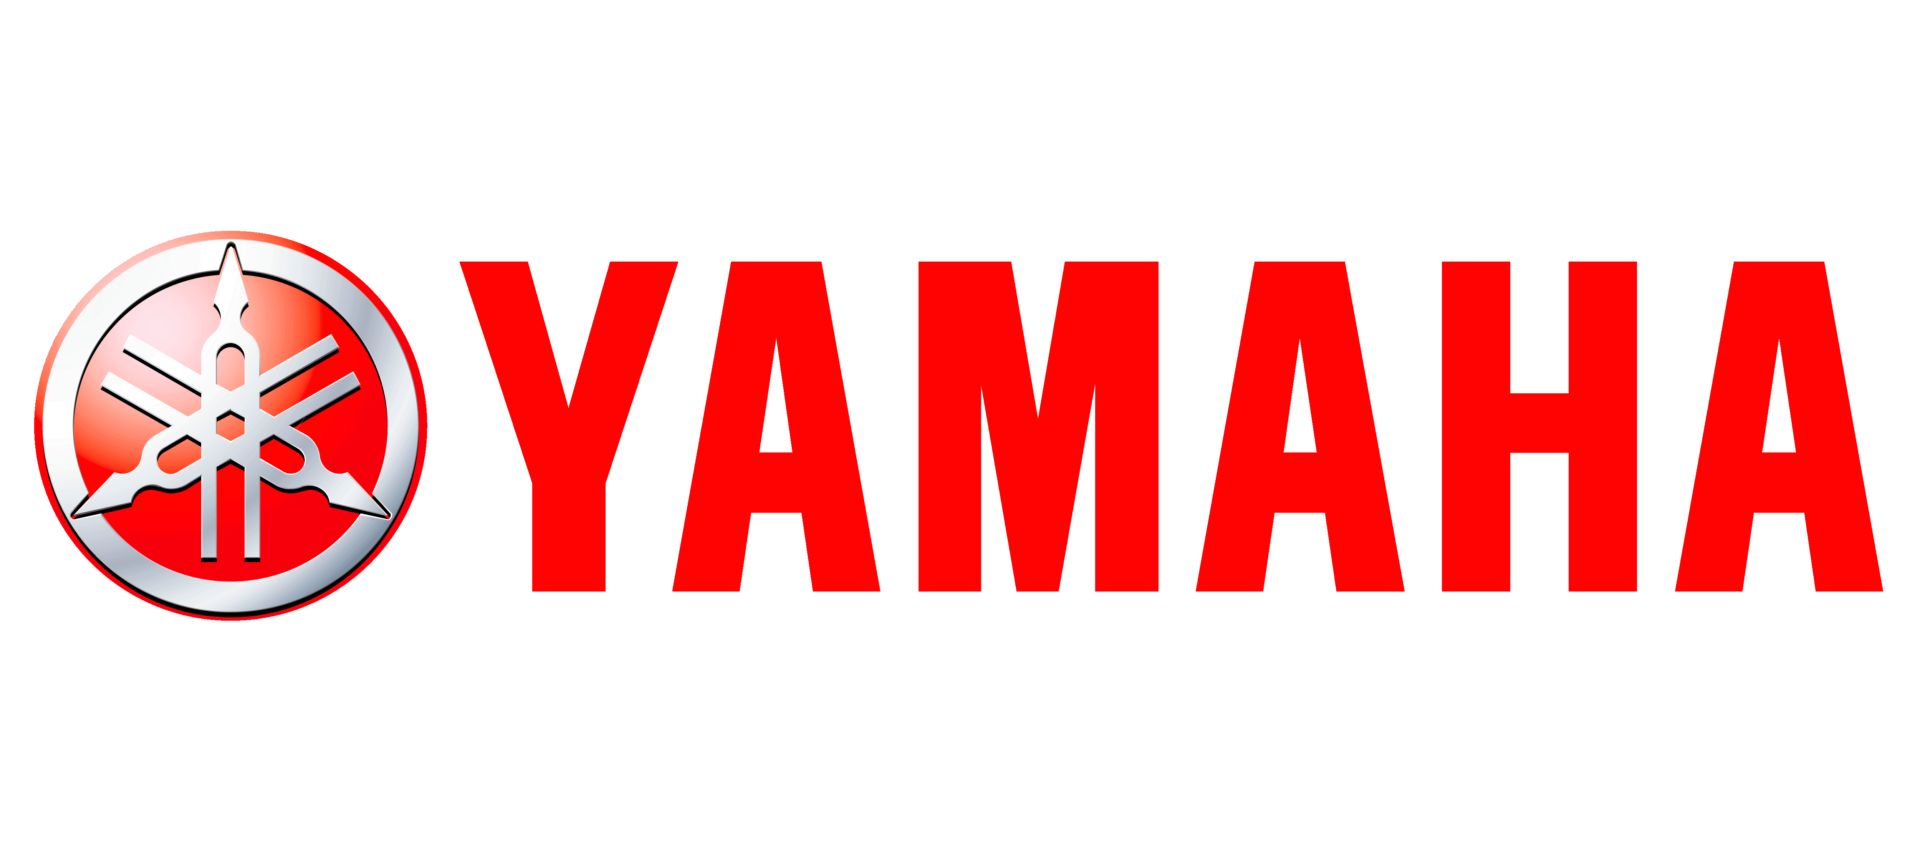 Yamaha Outboard Logo